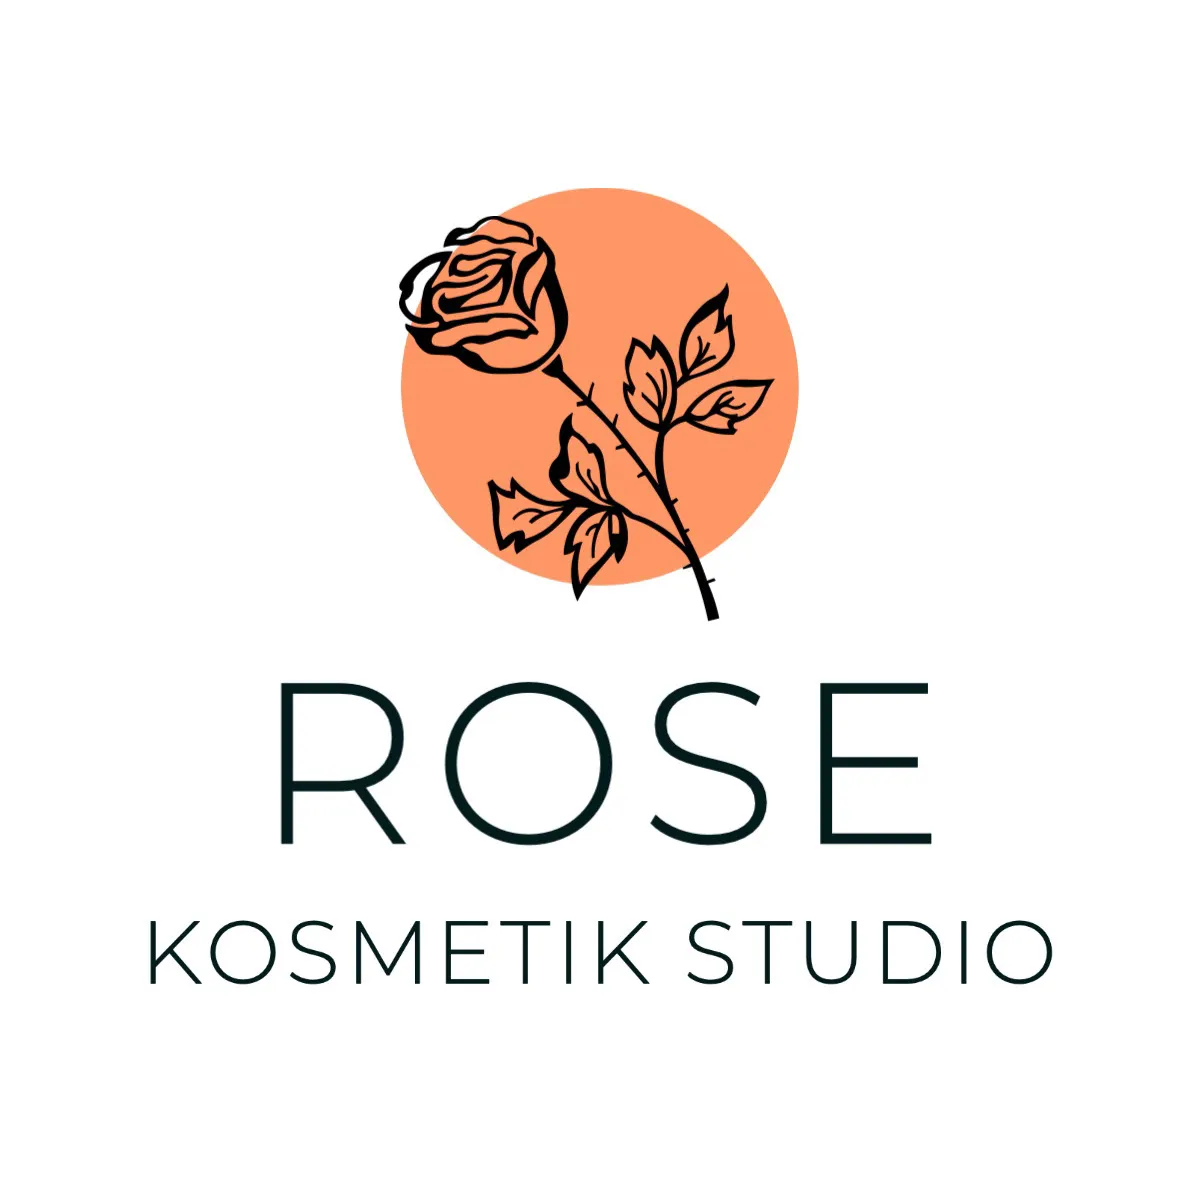 Orange and Black Rose Cosmetics Logo